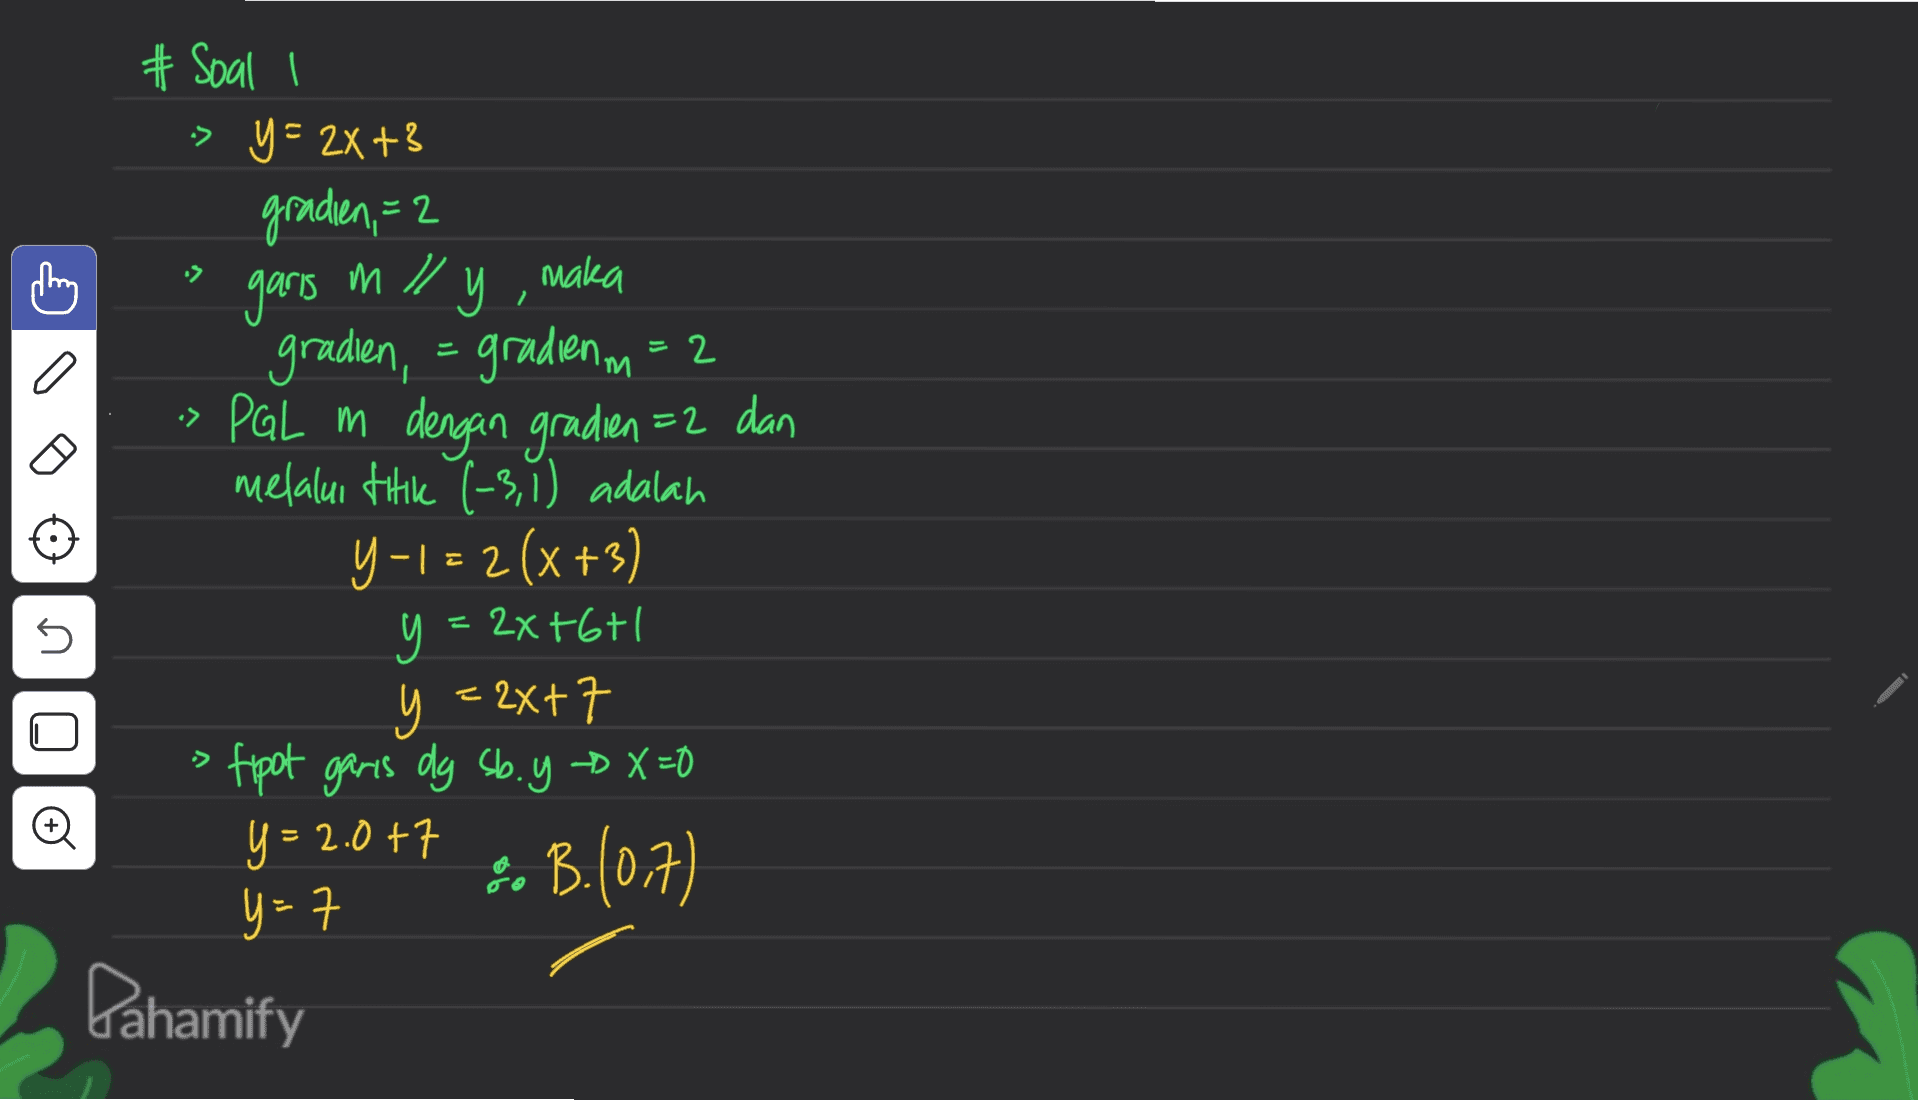 :> > # Soal I => y = 2x +3 gradien, = 2 garis m ll y , maka gradien, = gradienm=2 PGL m dengan gradien=2 dan melalui titik (-3,1) adalah Y-I = 2(x +3] y = 2x +6+1 y +1 y = 2x+7 fpot garis dy sb. y X=0 y= 2.017 . B.(0,7) y=7 - + U e Oo Dahamify 